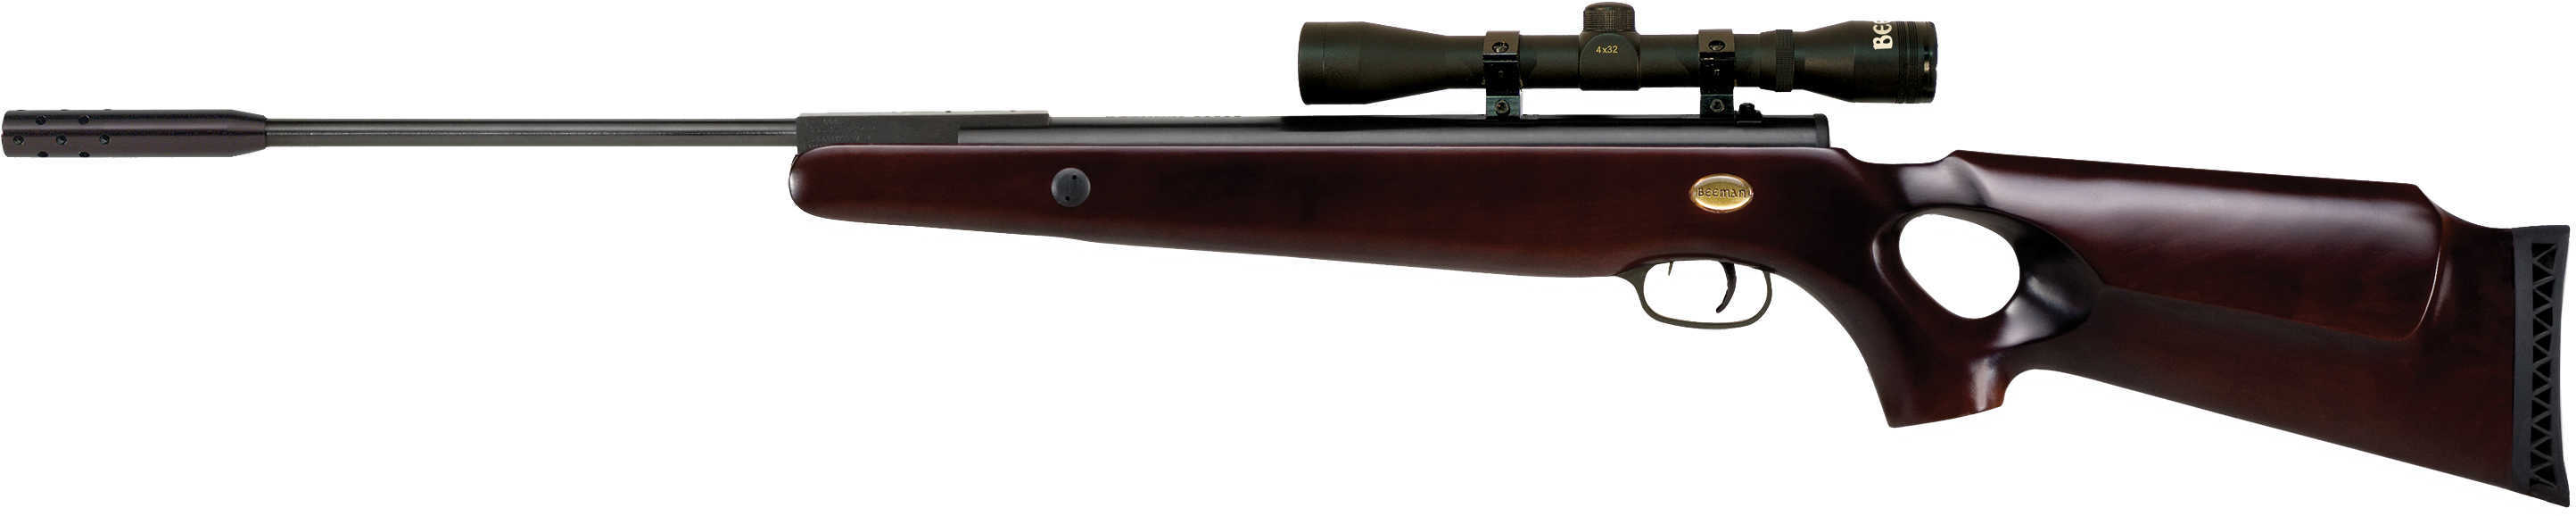 Beeman Ram XT Air Rifle .177 With 4X32 Scope